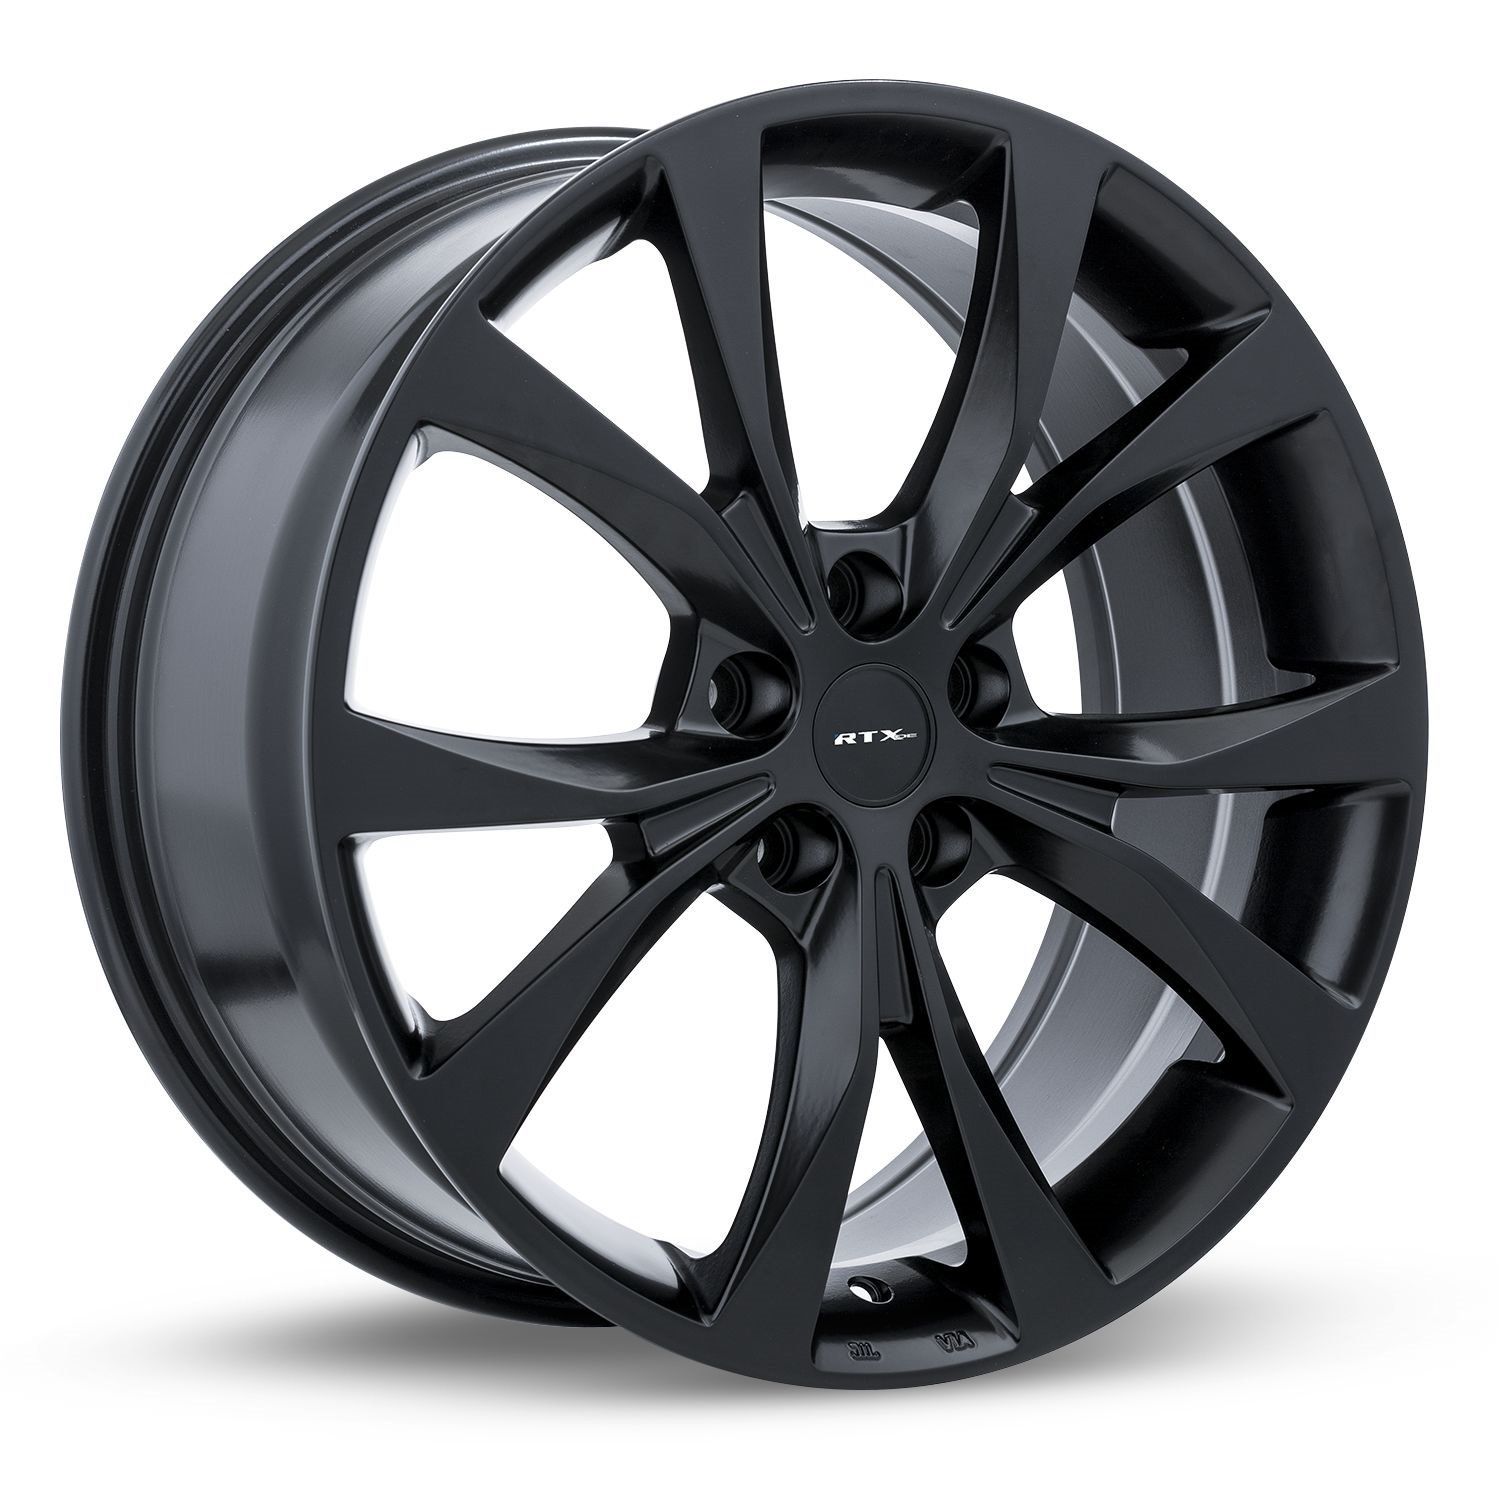 083059 OE-Series Flint Wheel [Size: 20" x 8.50"] Satin Black Finish